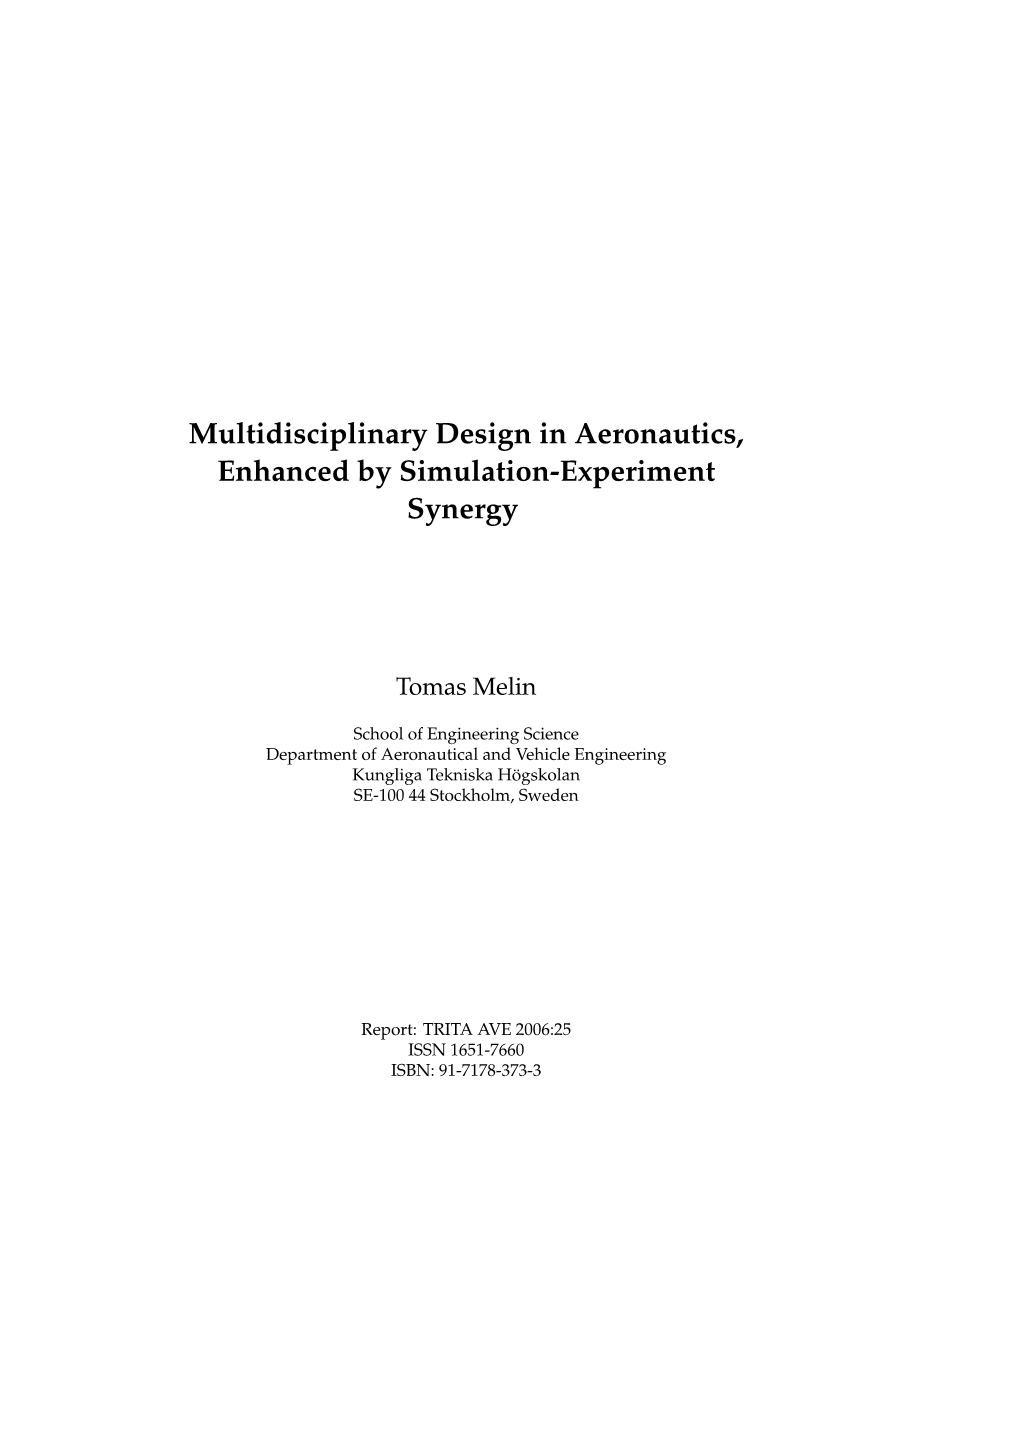 Multidisciplinary Design in Aeronautics, Enhanced by Simulation-Experiment Synergy